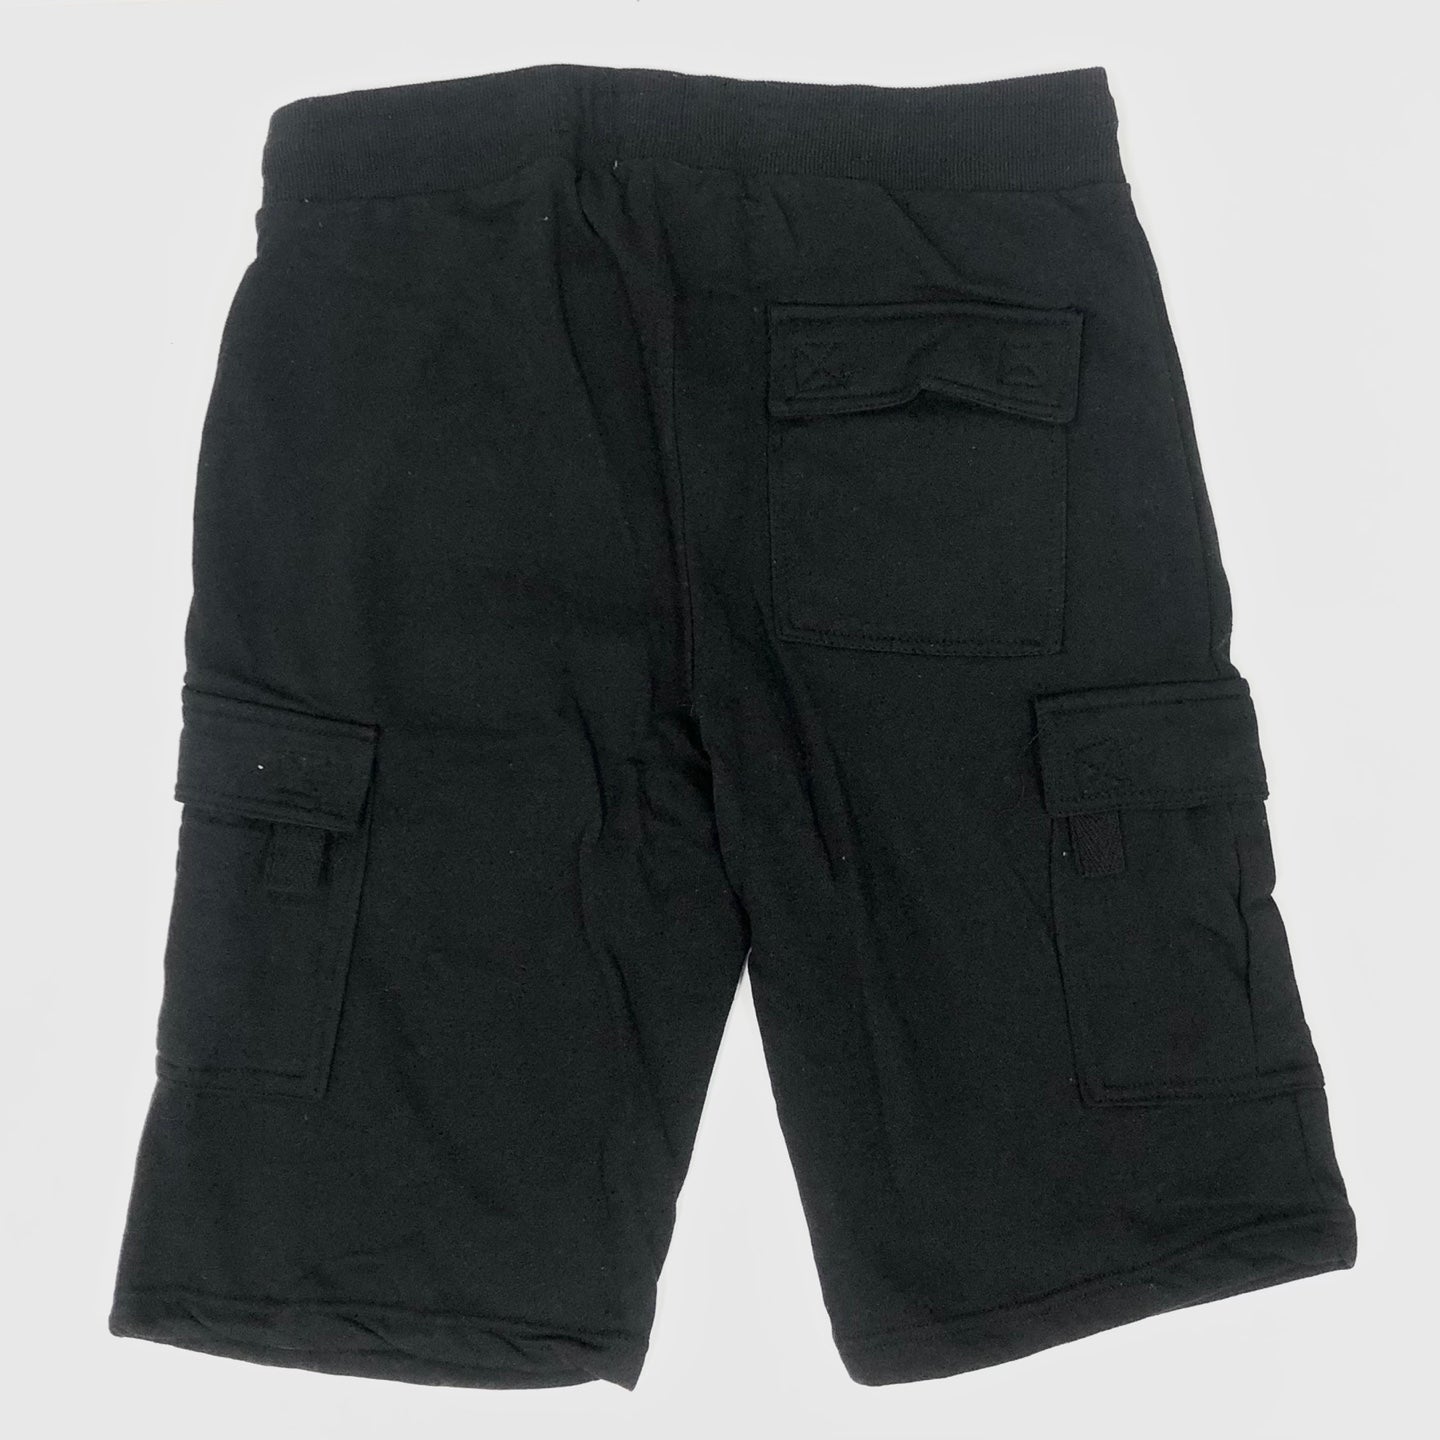 Fleece Shorts with Pockets